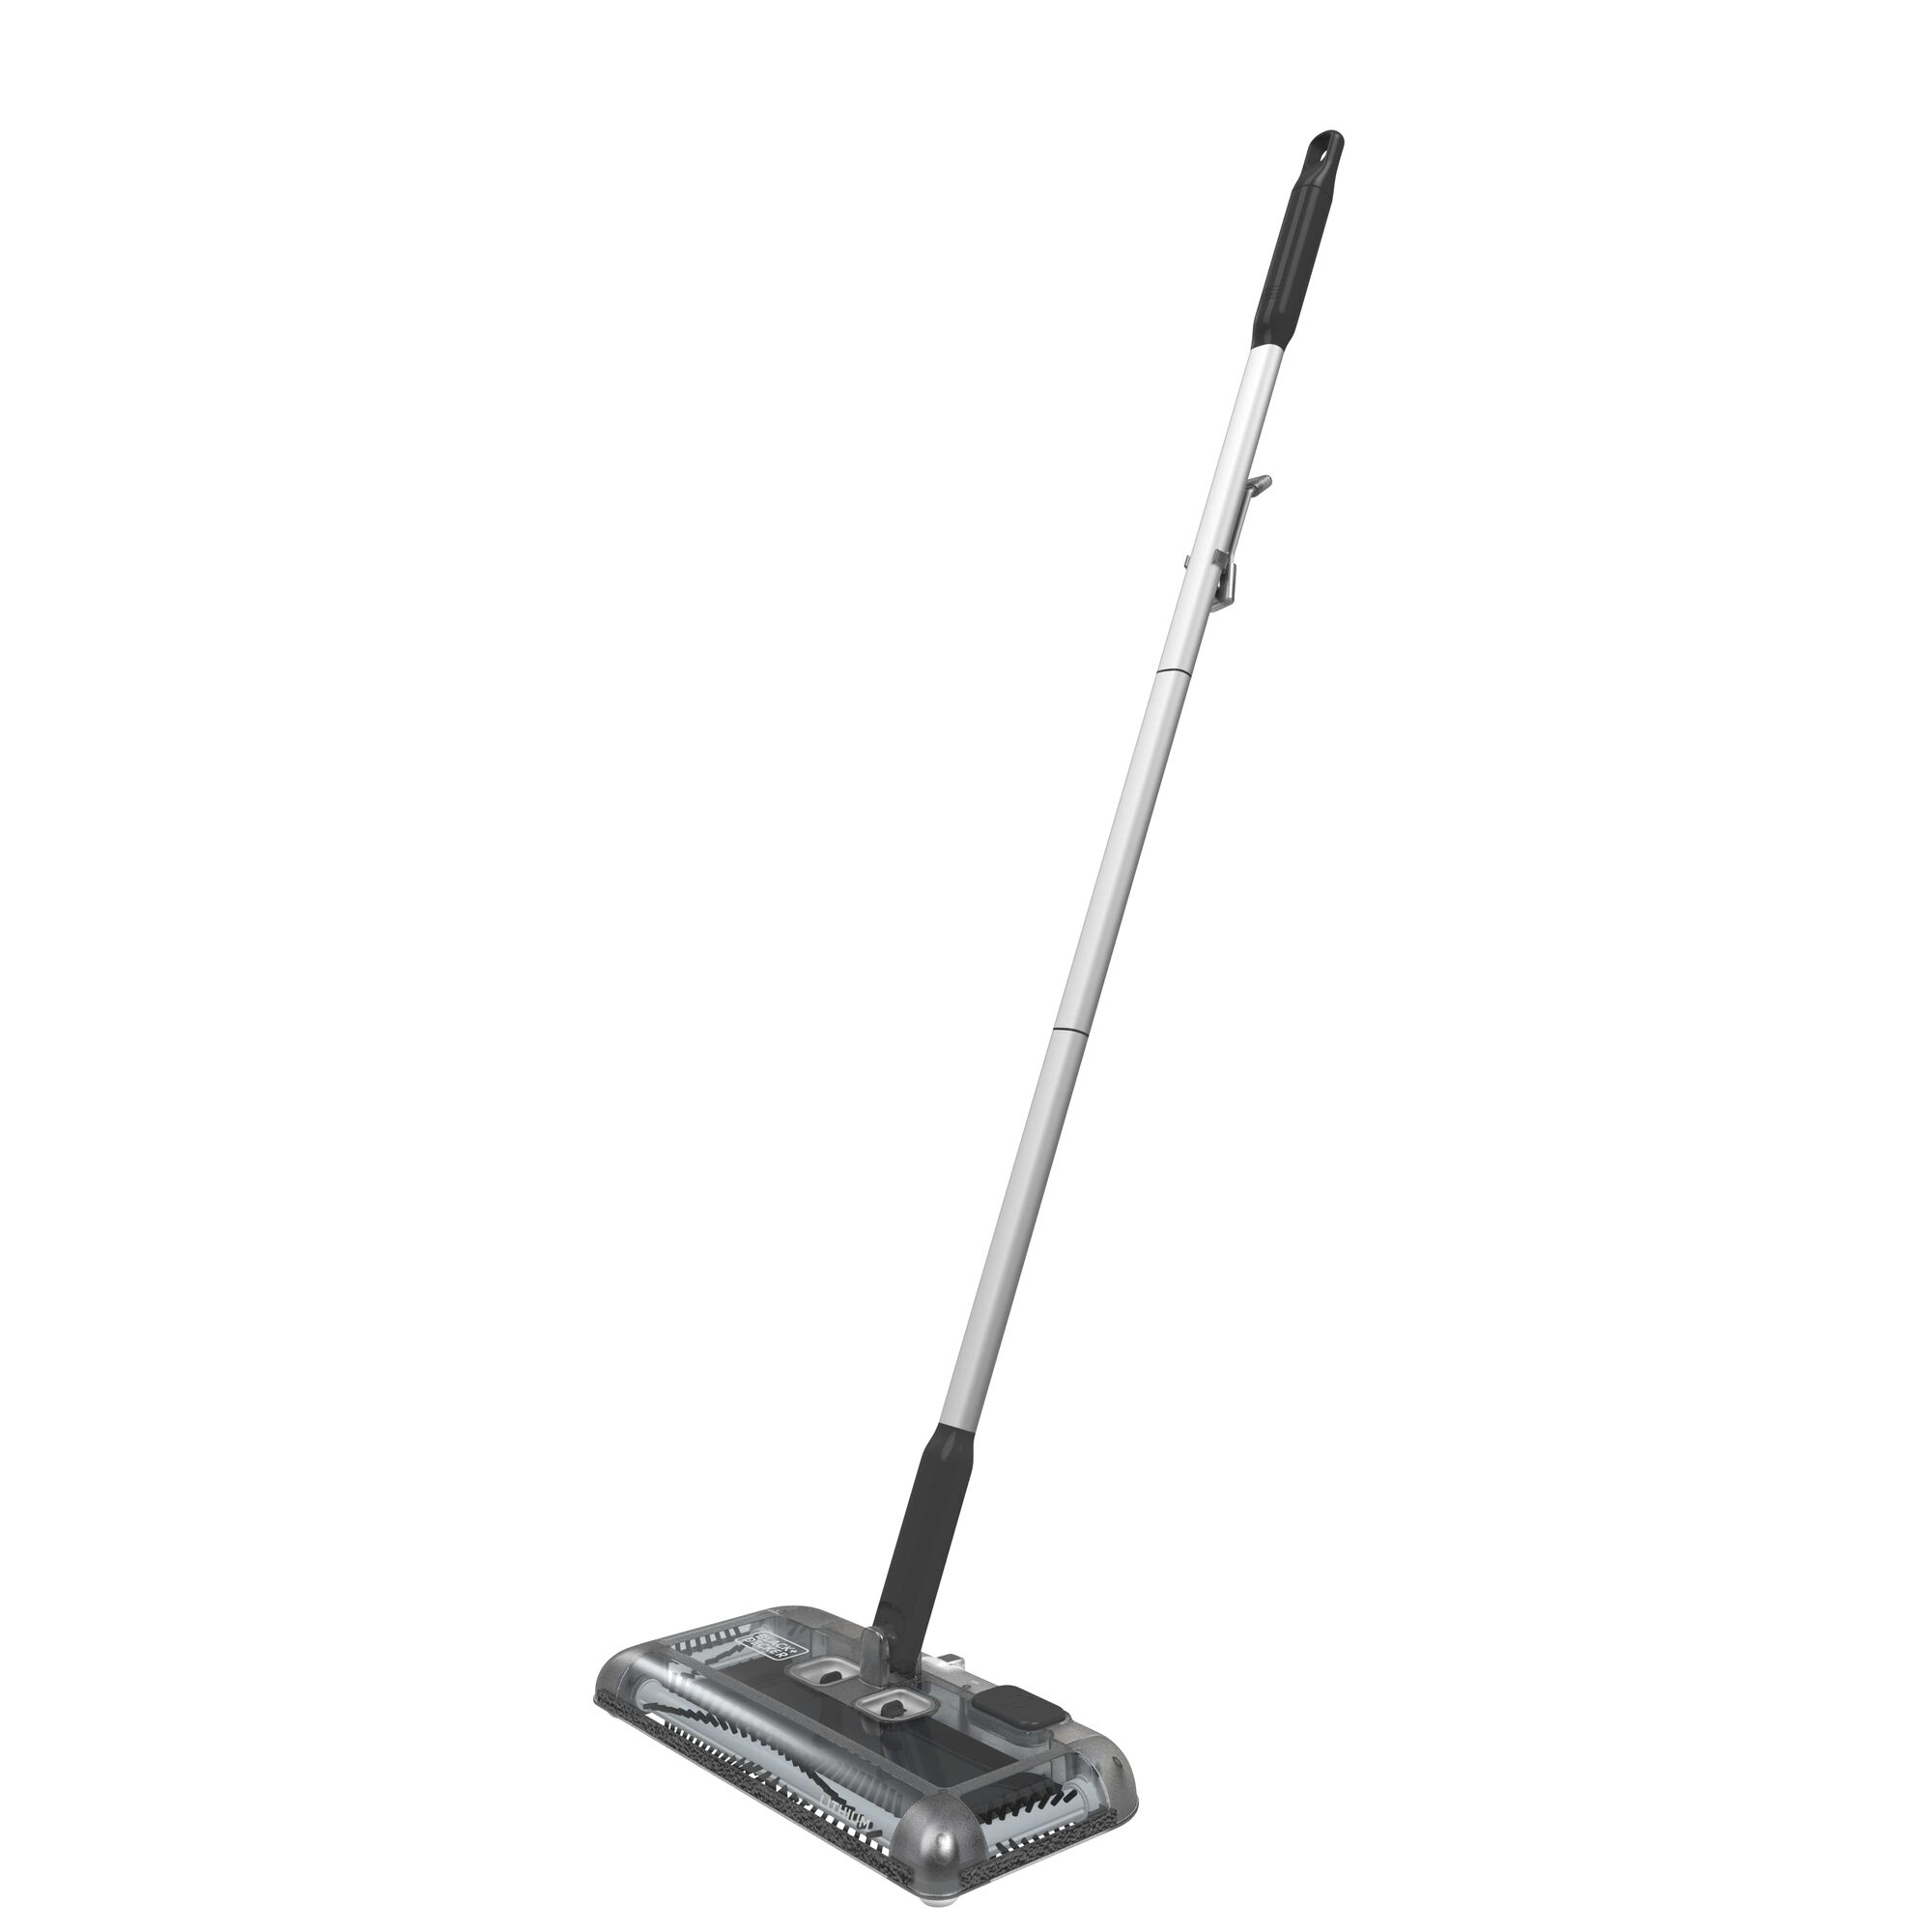 Profile of the BLACK+DECKER floor sweeper